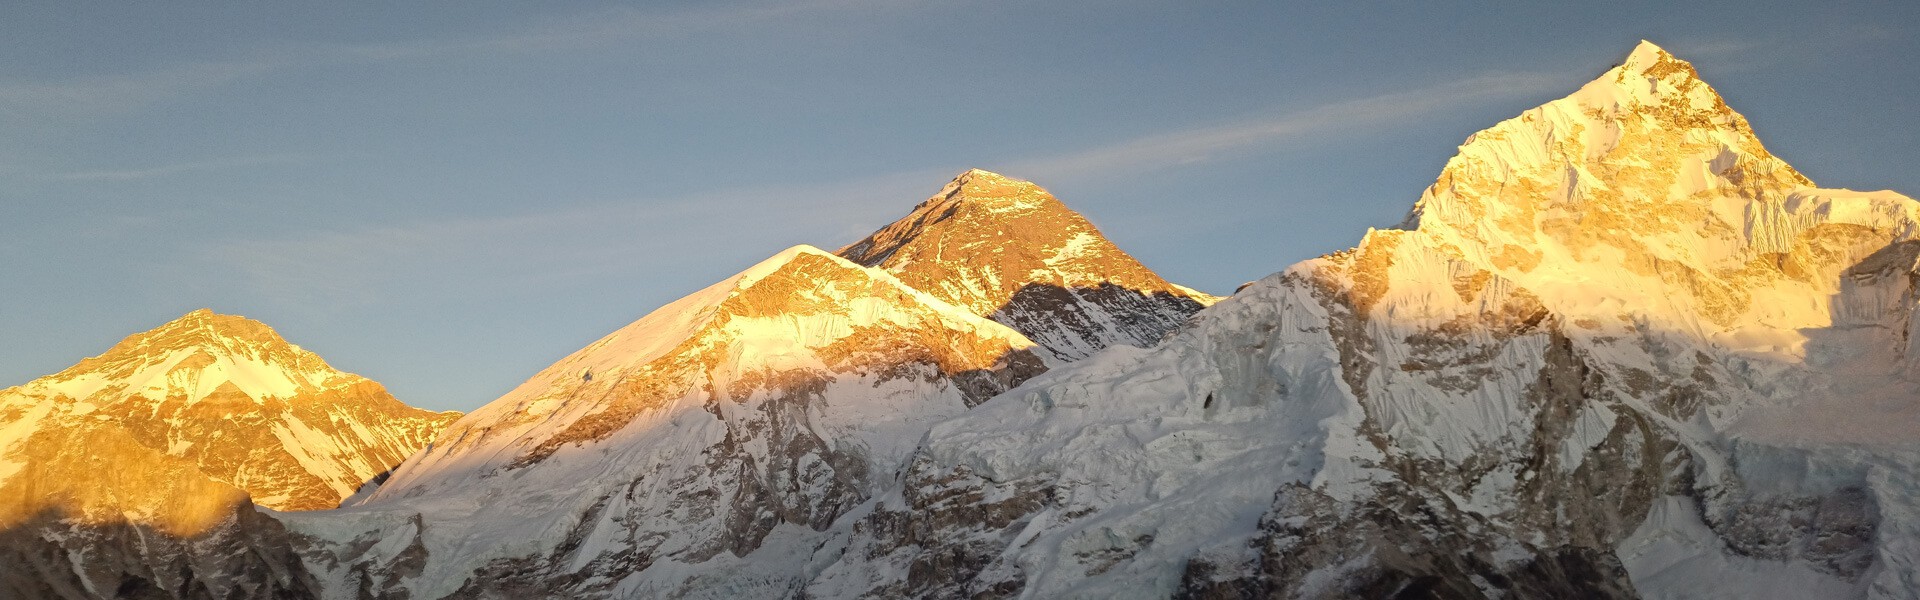 Everest Base Camp Trekking View